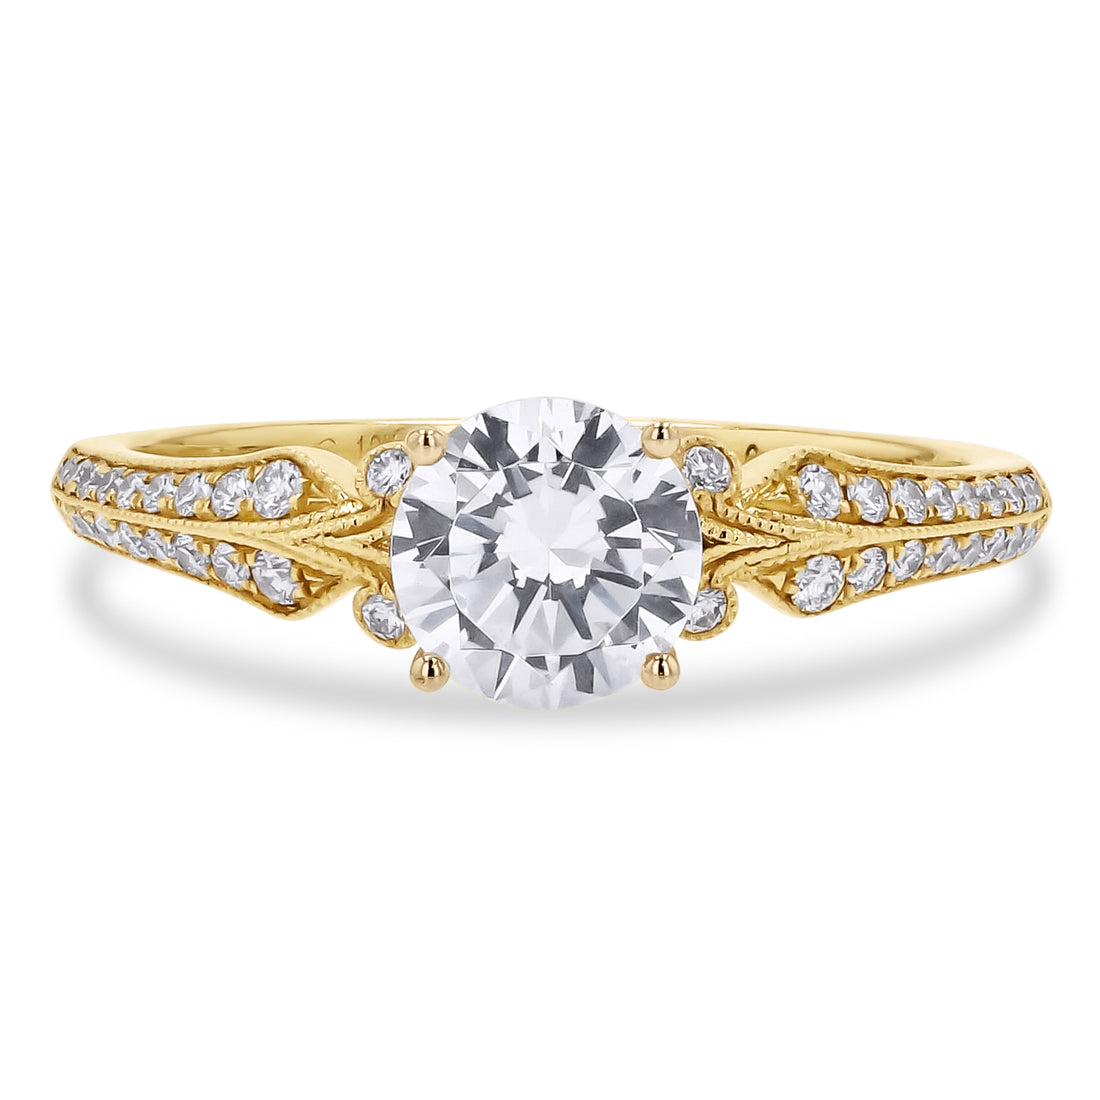 The Vintage Filigree Engagement Ring - Skeie's Jewelers